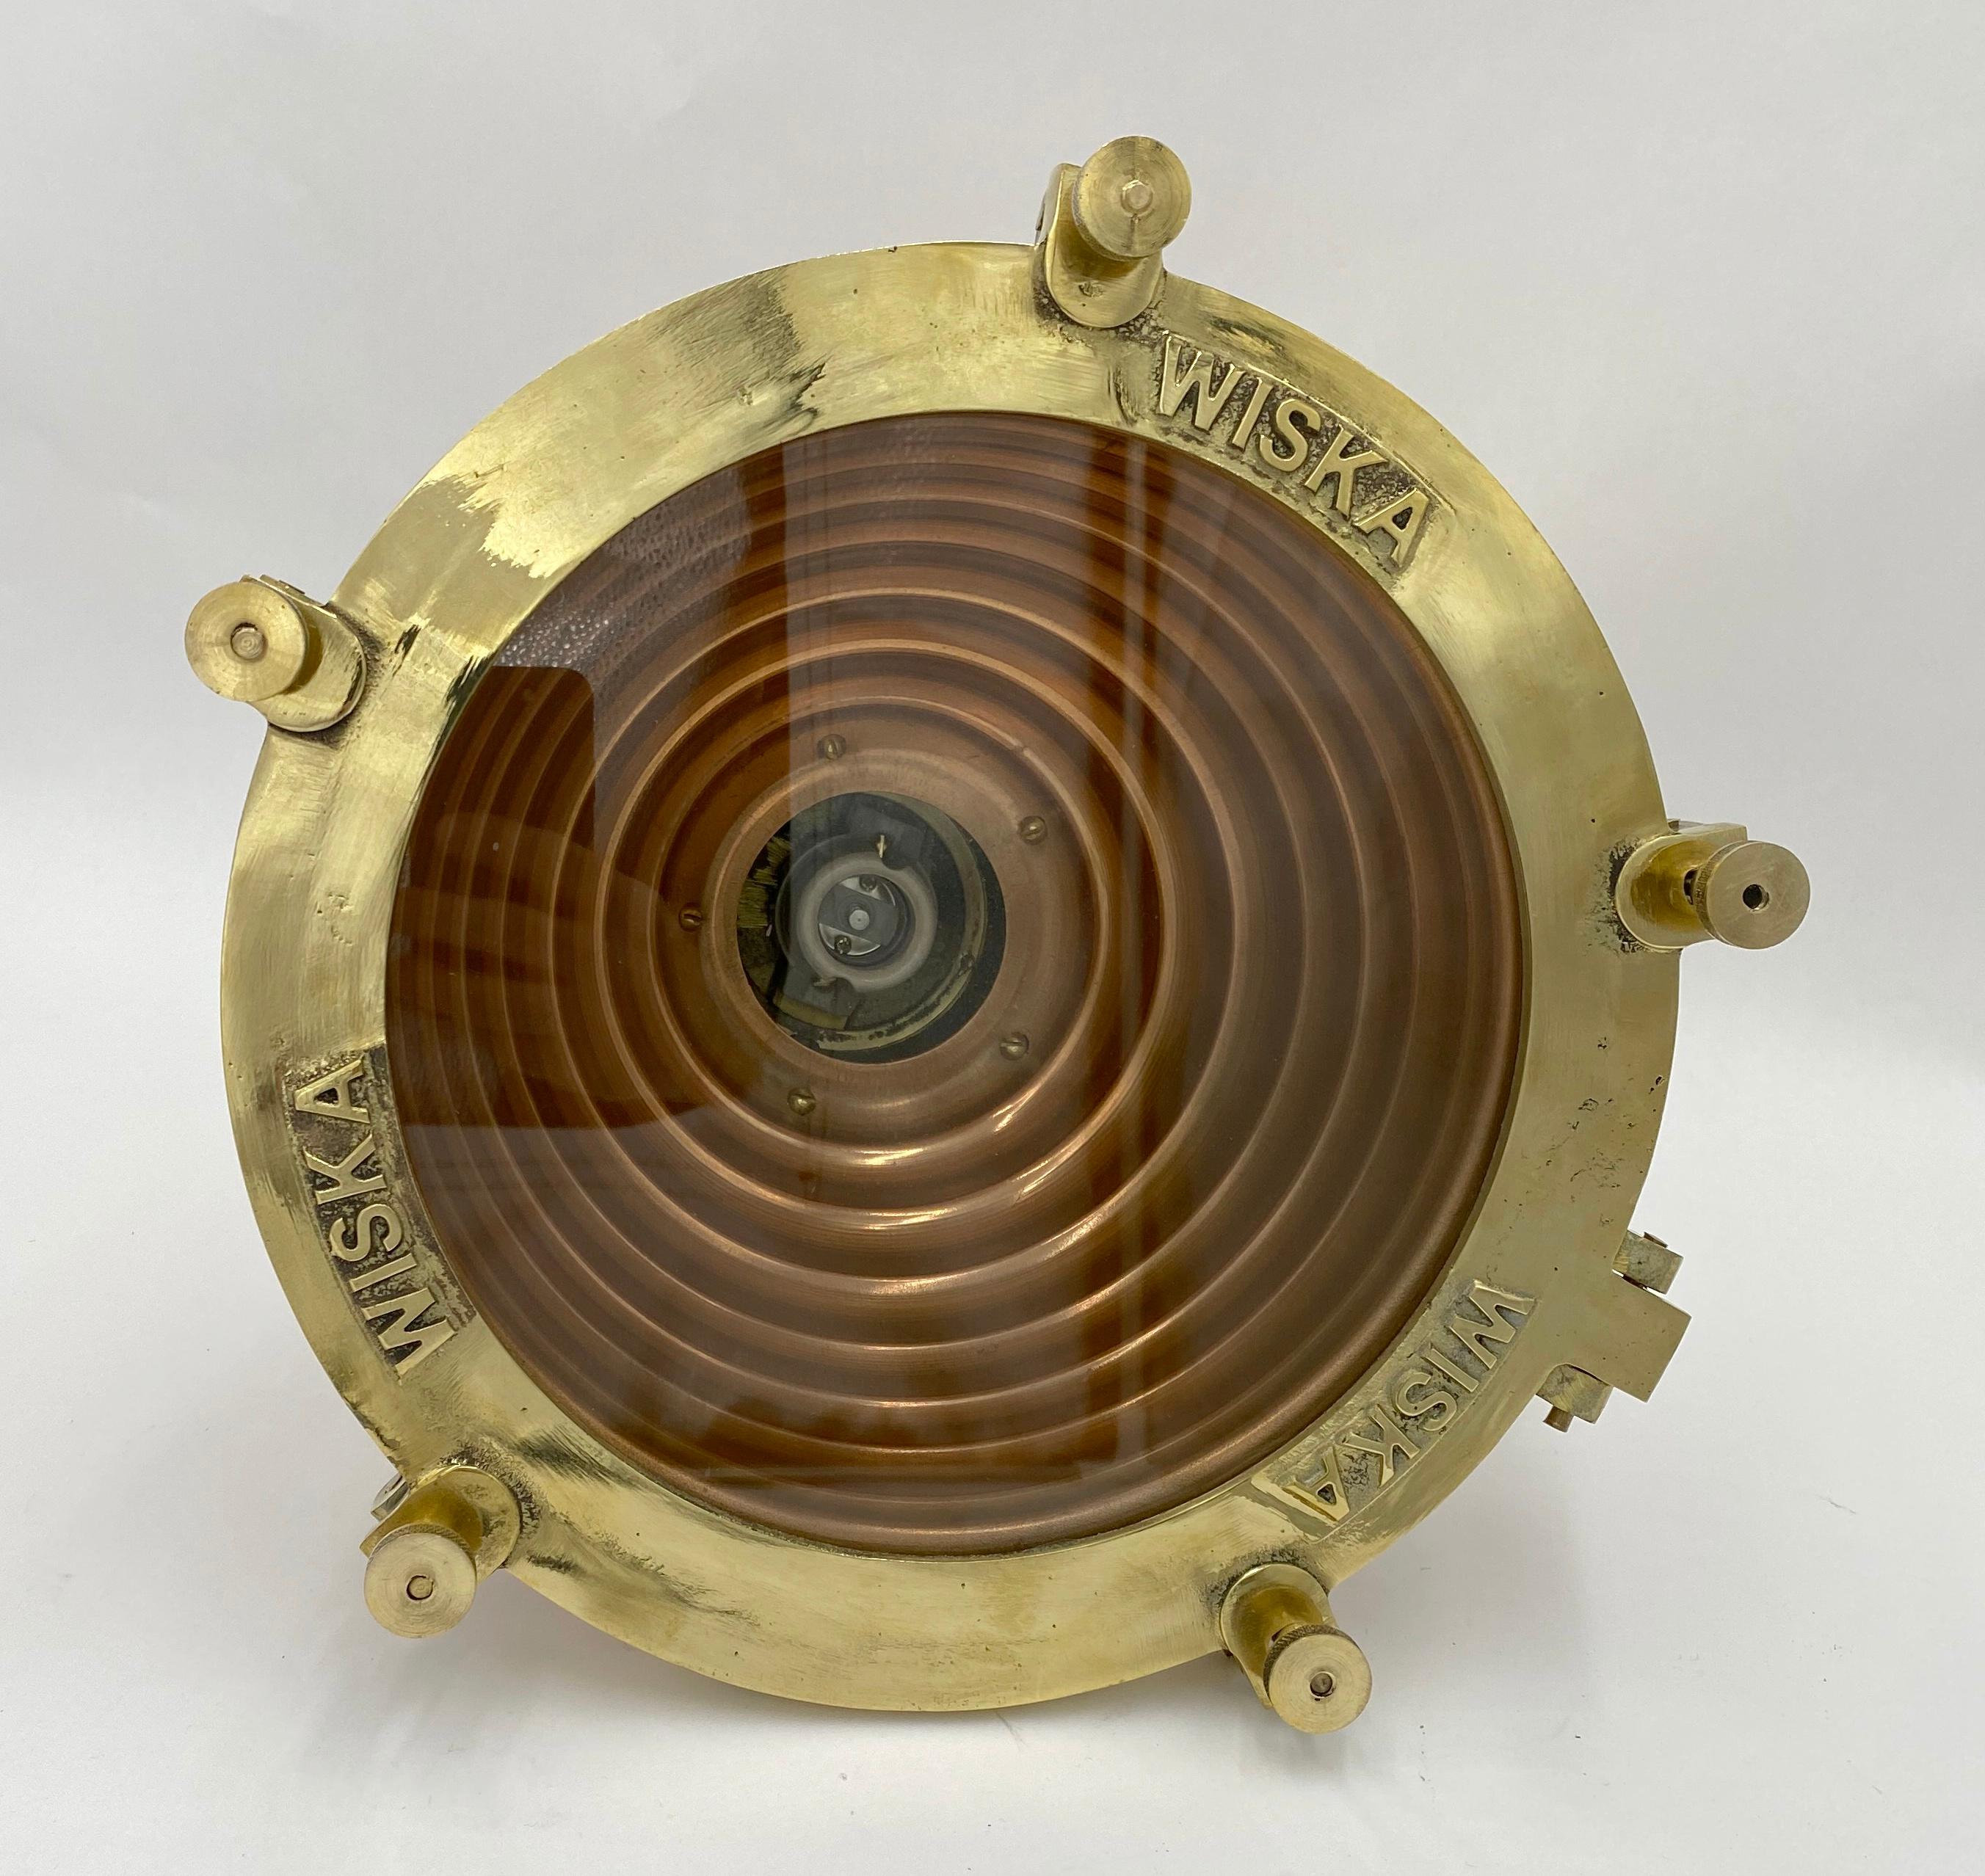 Beehive Nautical Pendant Fox Spot Pendant Light Copper & Brass by Wiska 2